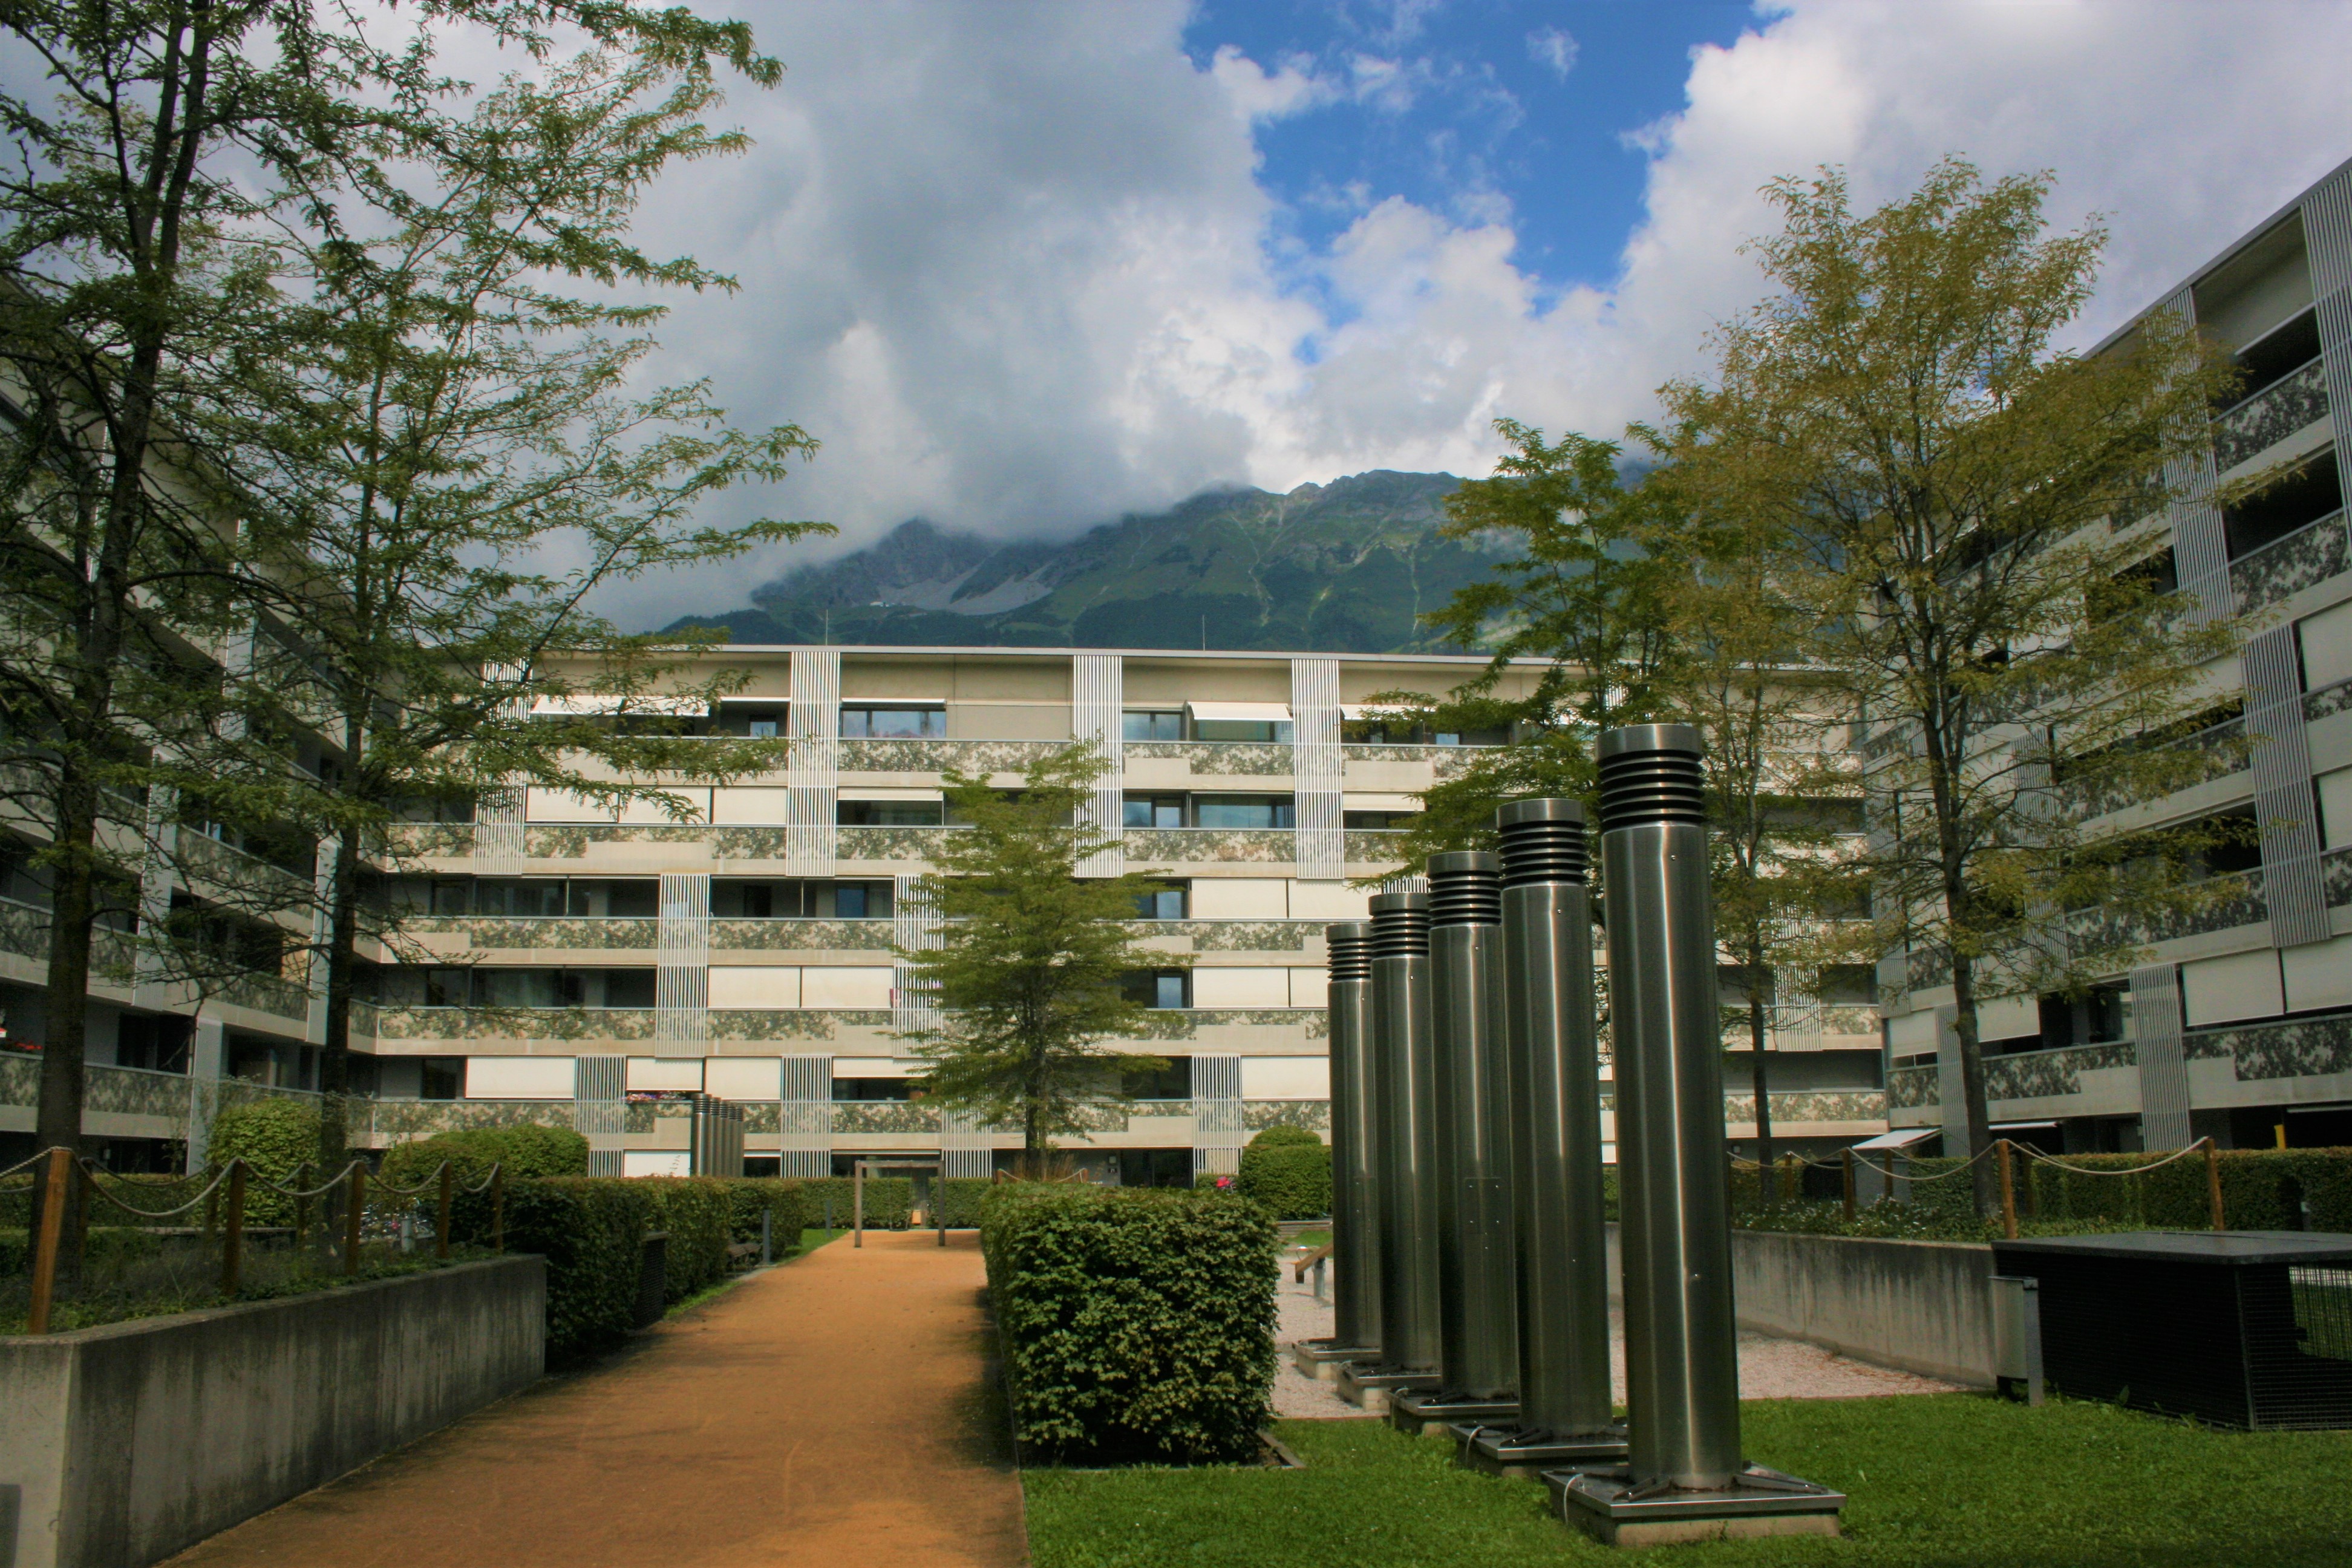 Lodenareal, a Passive House apartment complex in Innsbruck, Austria. Photo courtesy of Gabriel Rojas